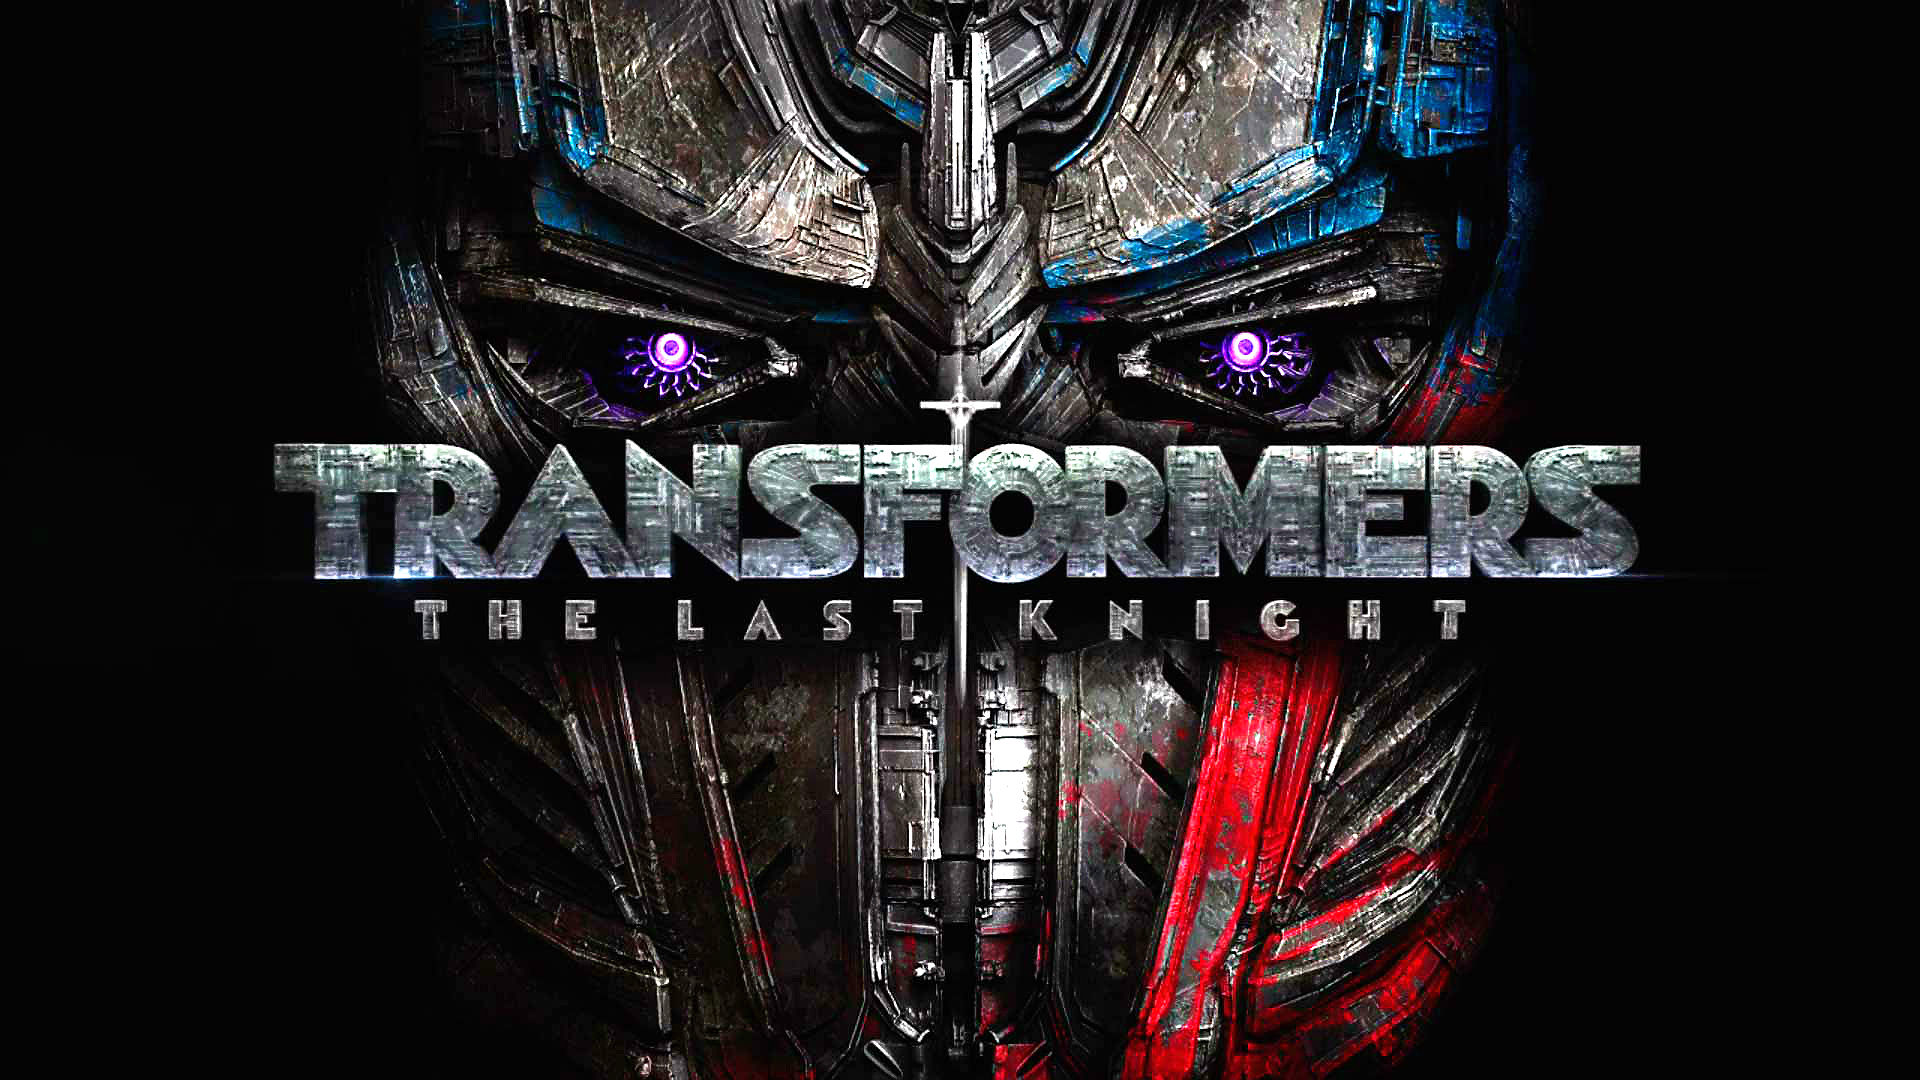 Movie Transformers The Last Knight 1920x1080